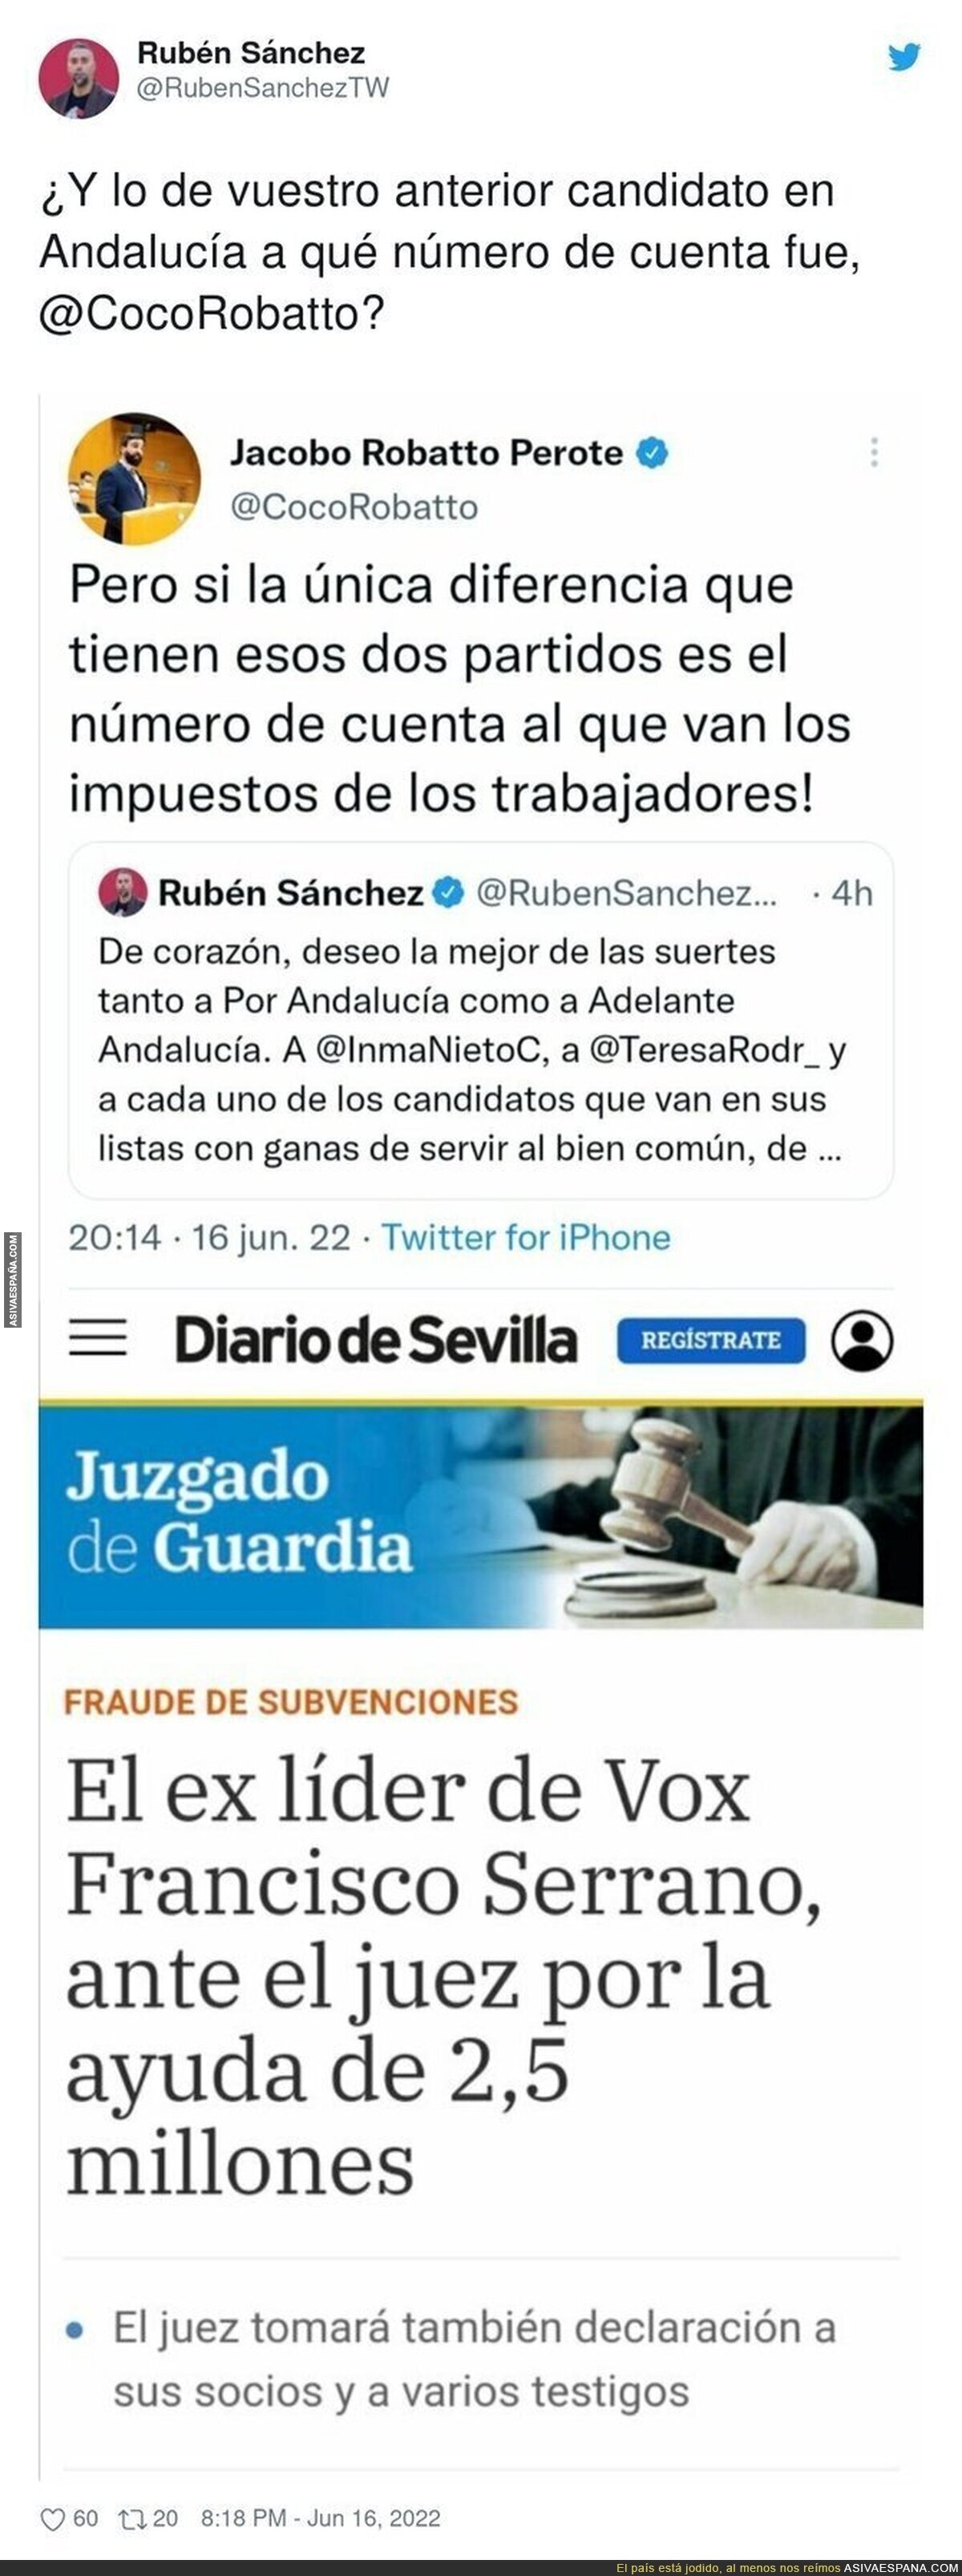 Rubén Sánchez respondiendo a VOX